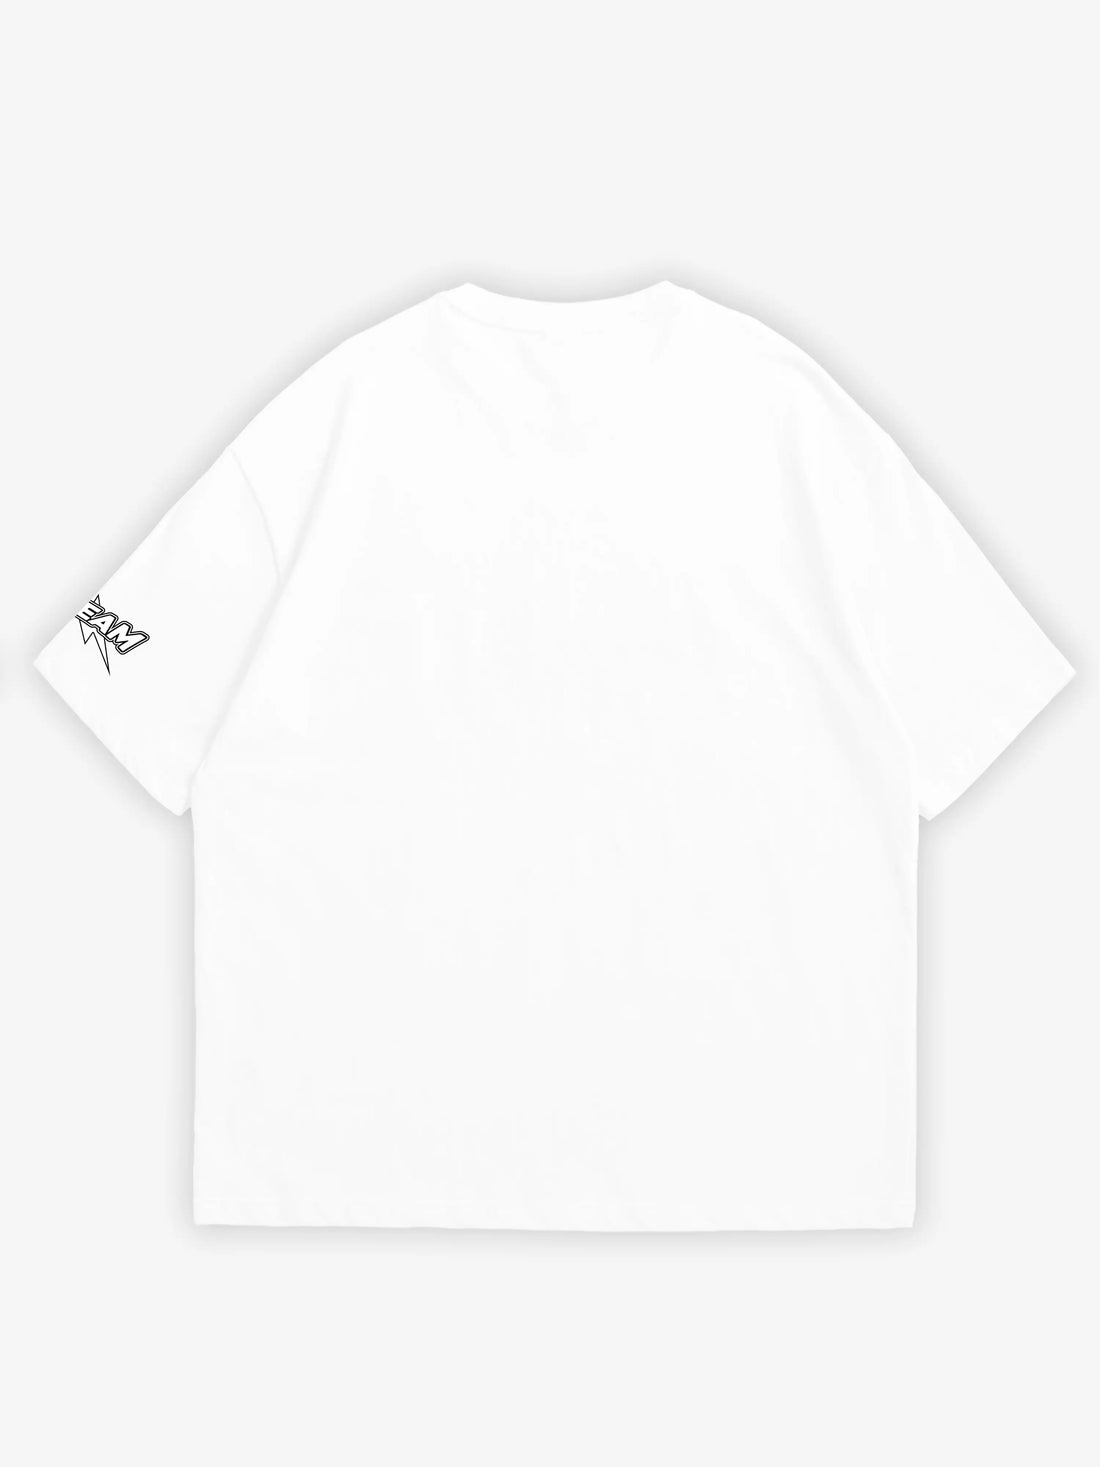 White oversized t-shirt, space crew graphic y2k print, skream streetwear t-shirt